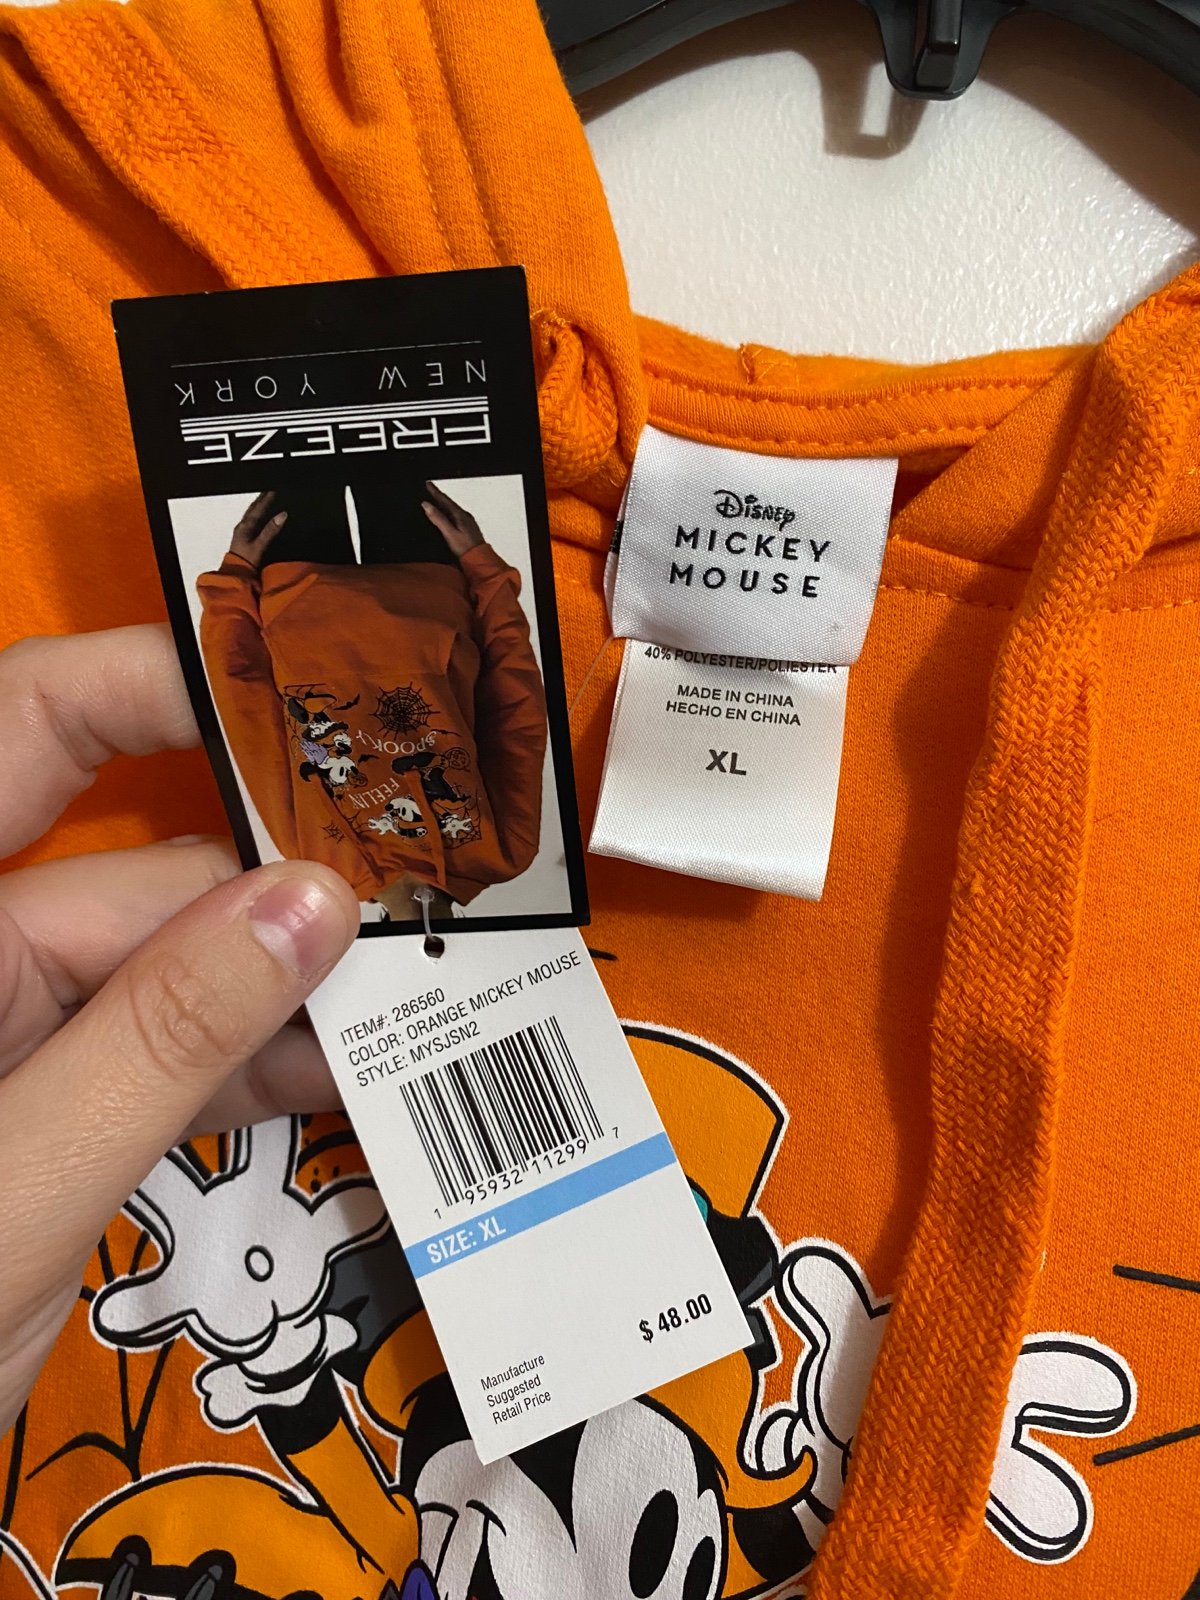 Cheap New Disney Halloween Orange Sweatshirt GkogCEnQ8 Everyday Low Prices